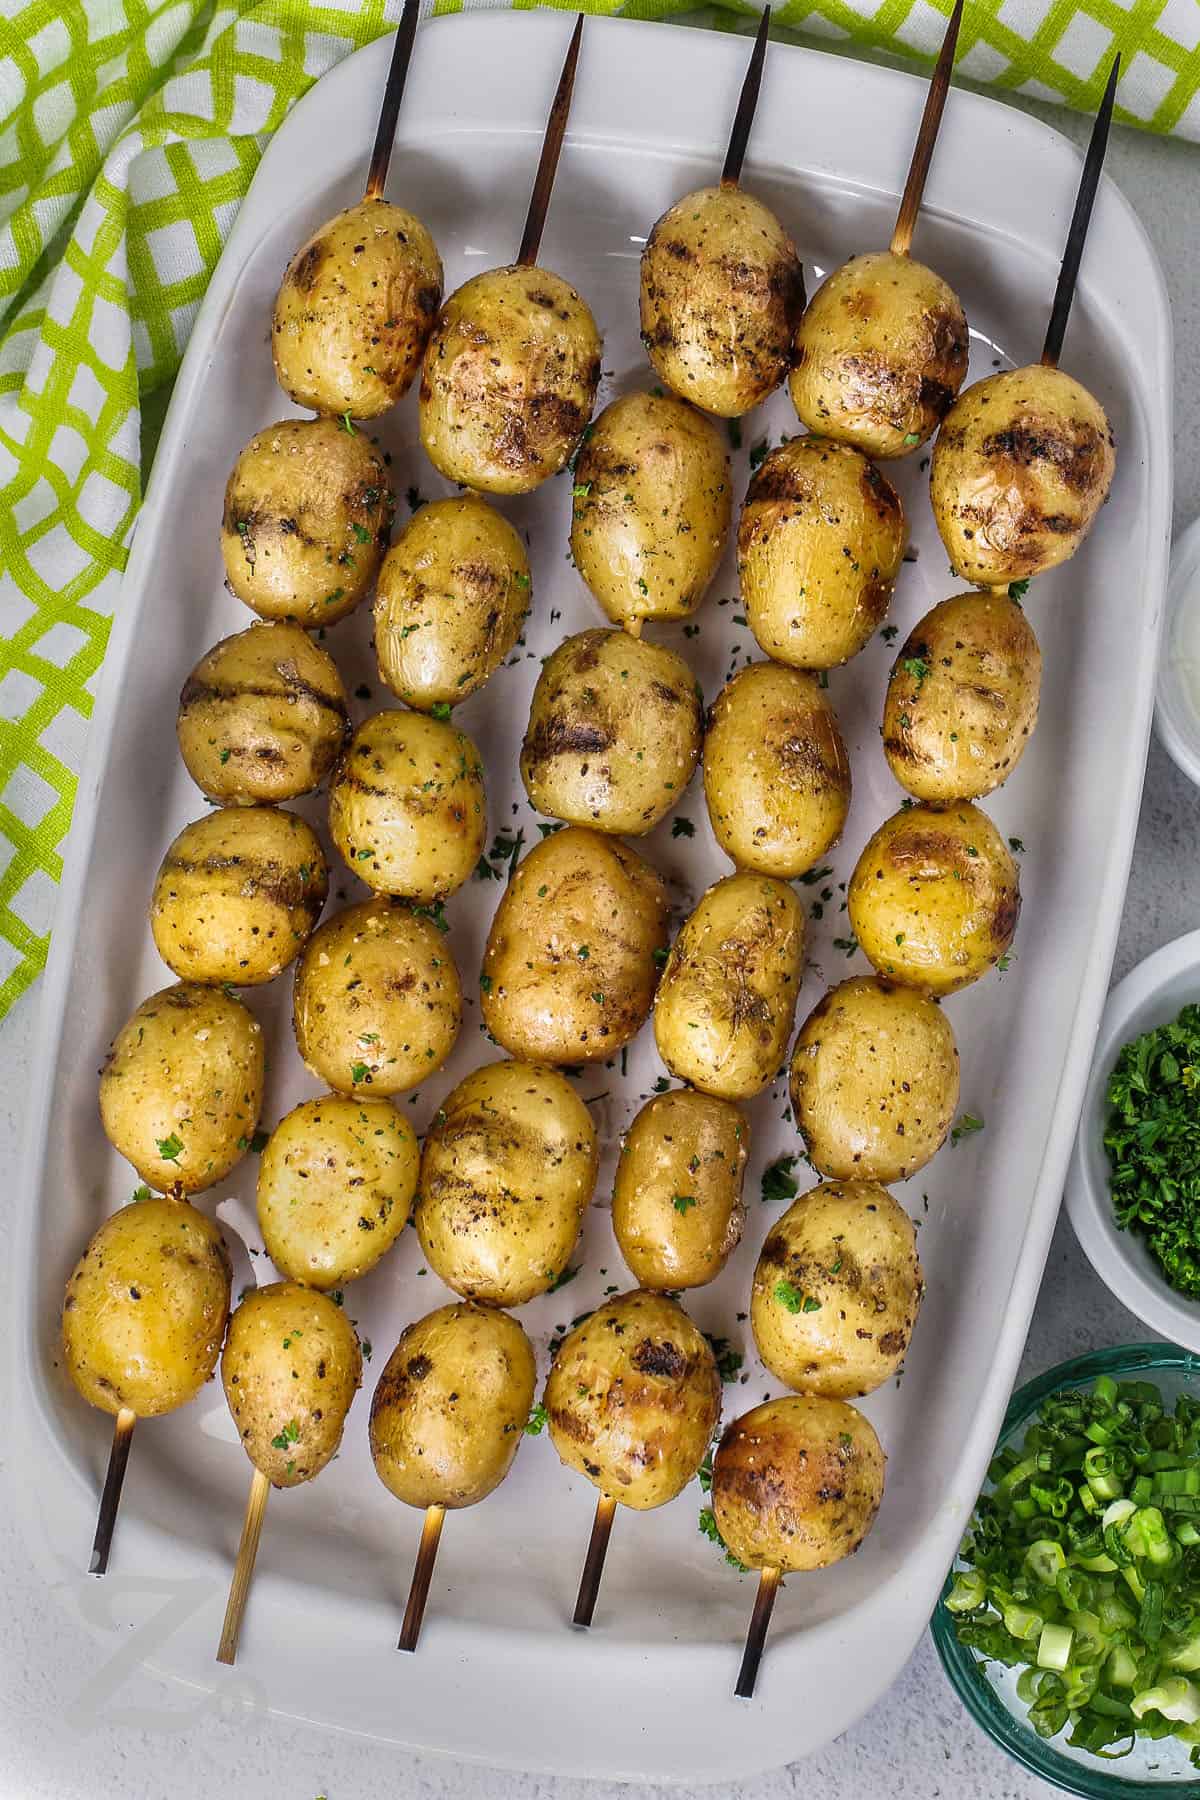 Grilled Potatoes with seasonings